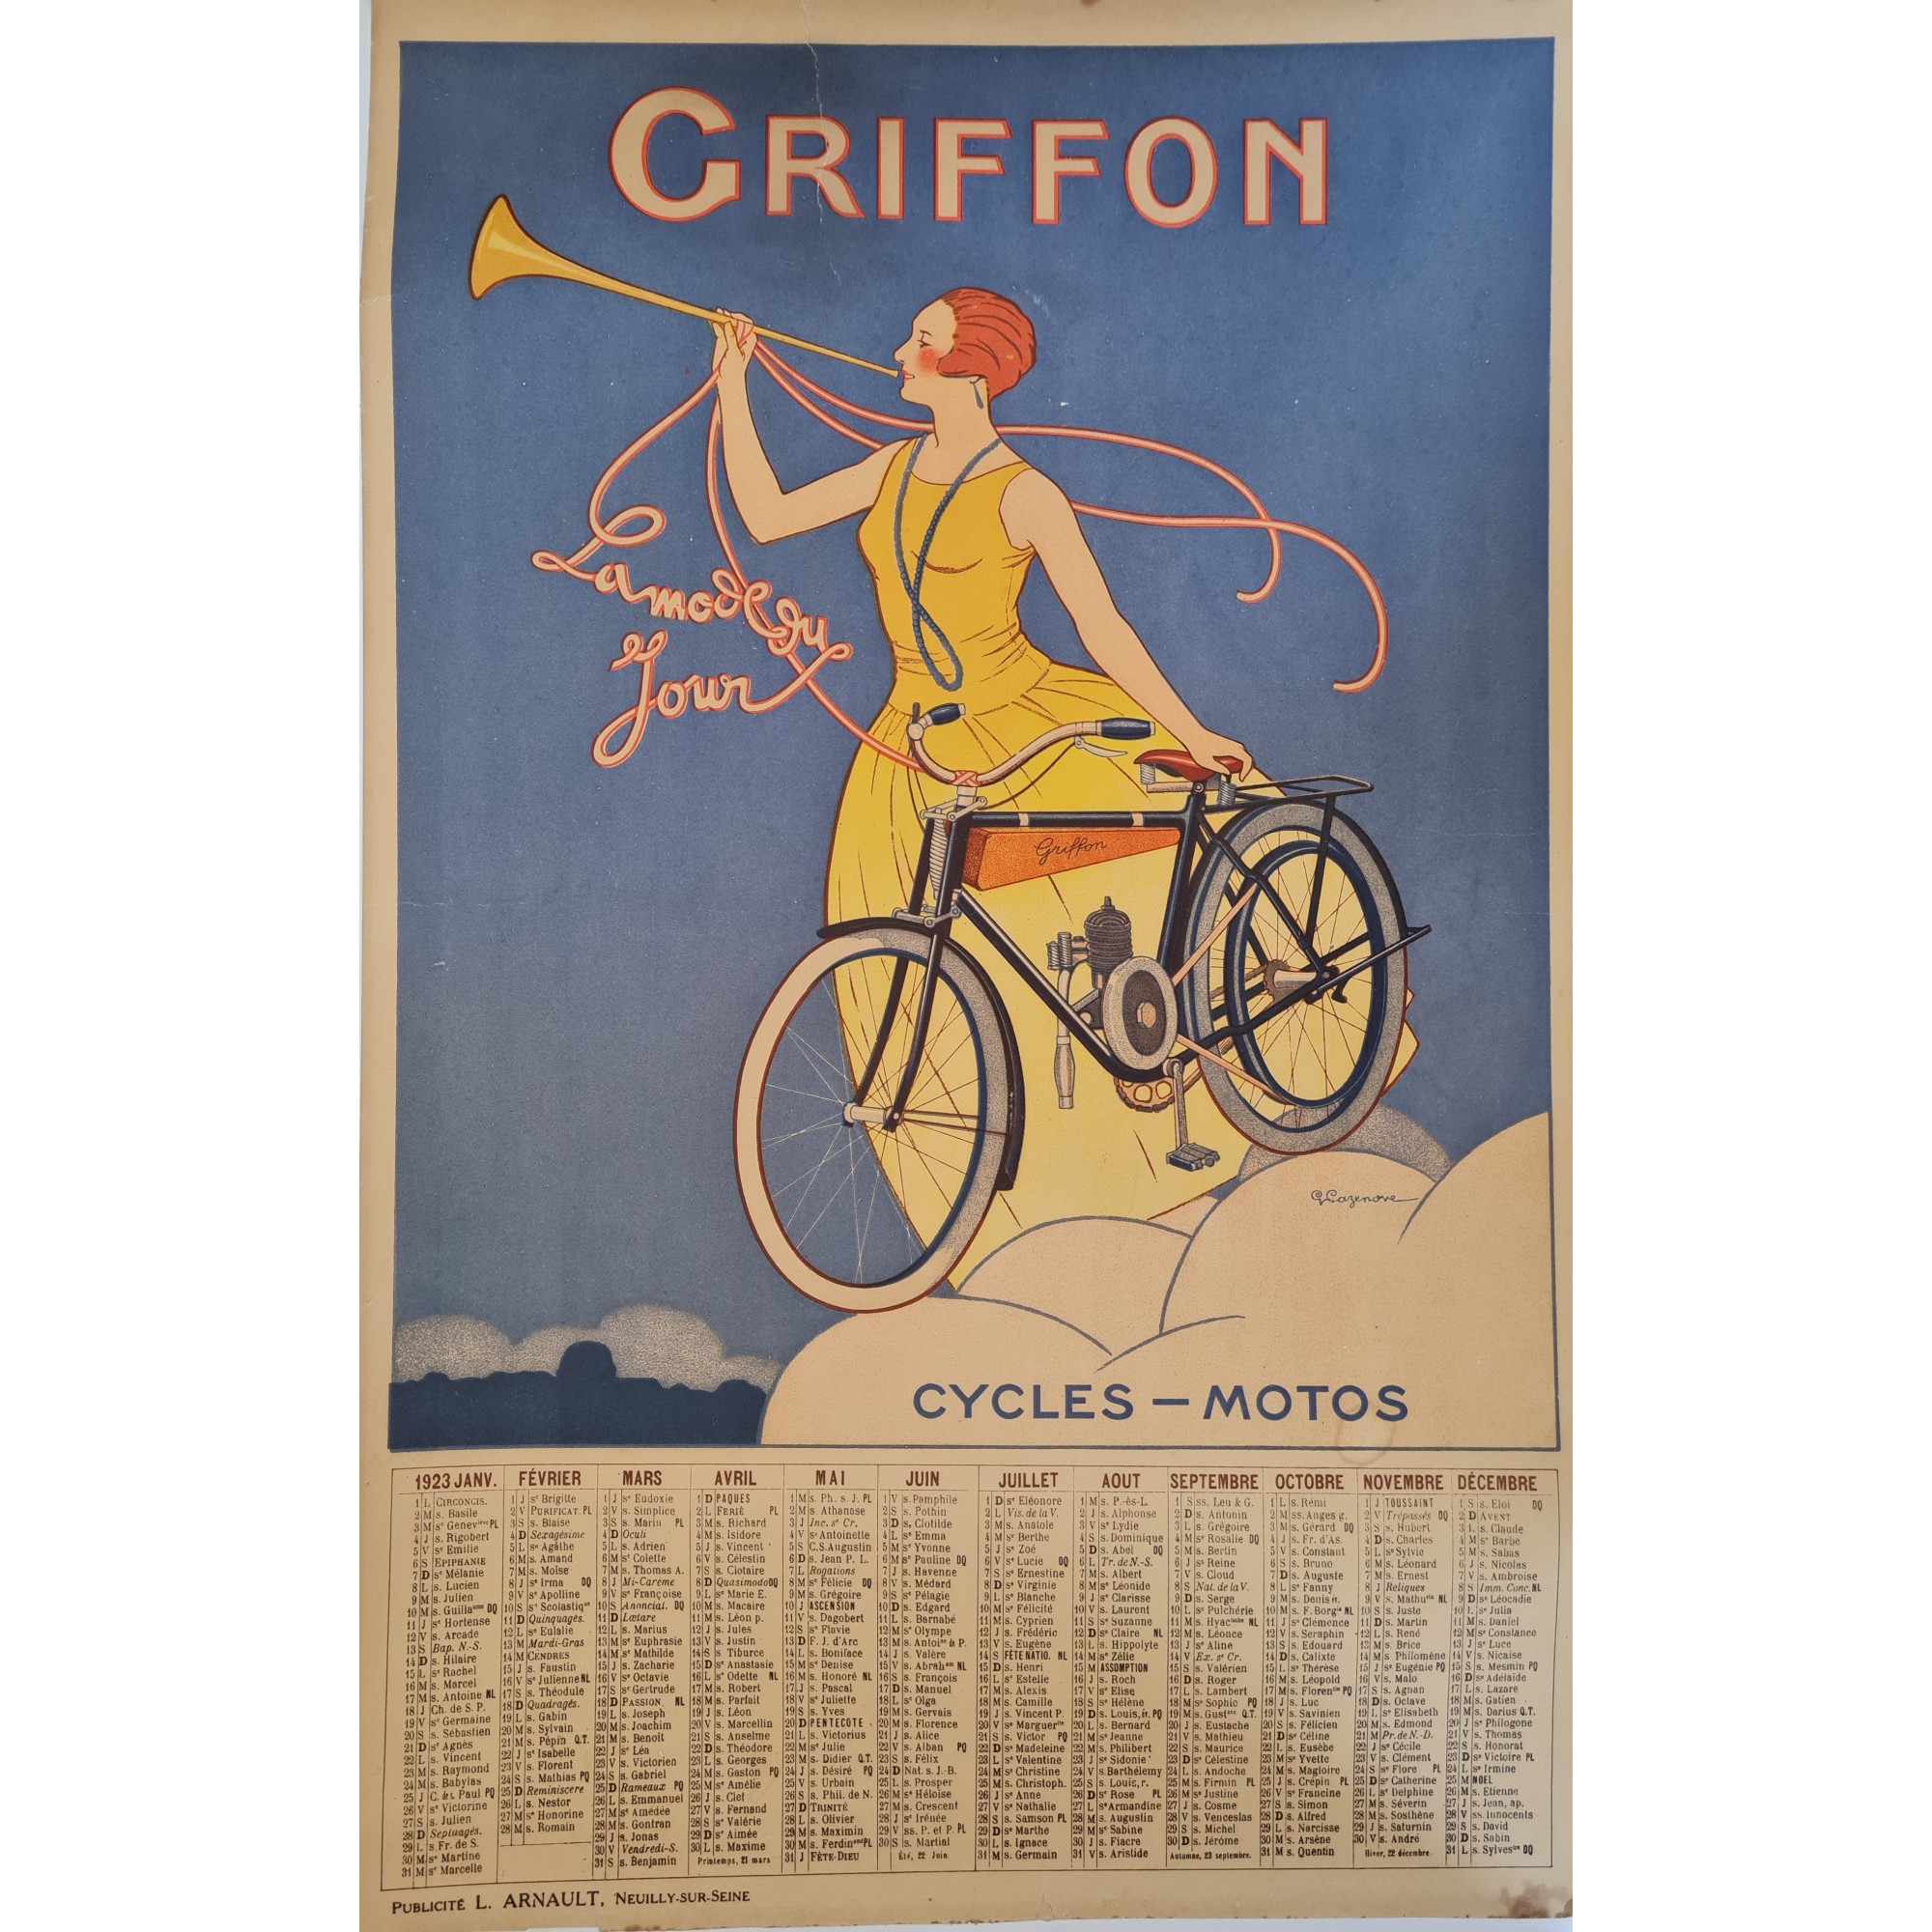 1923 - Cycles Griffon